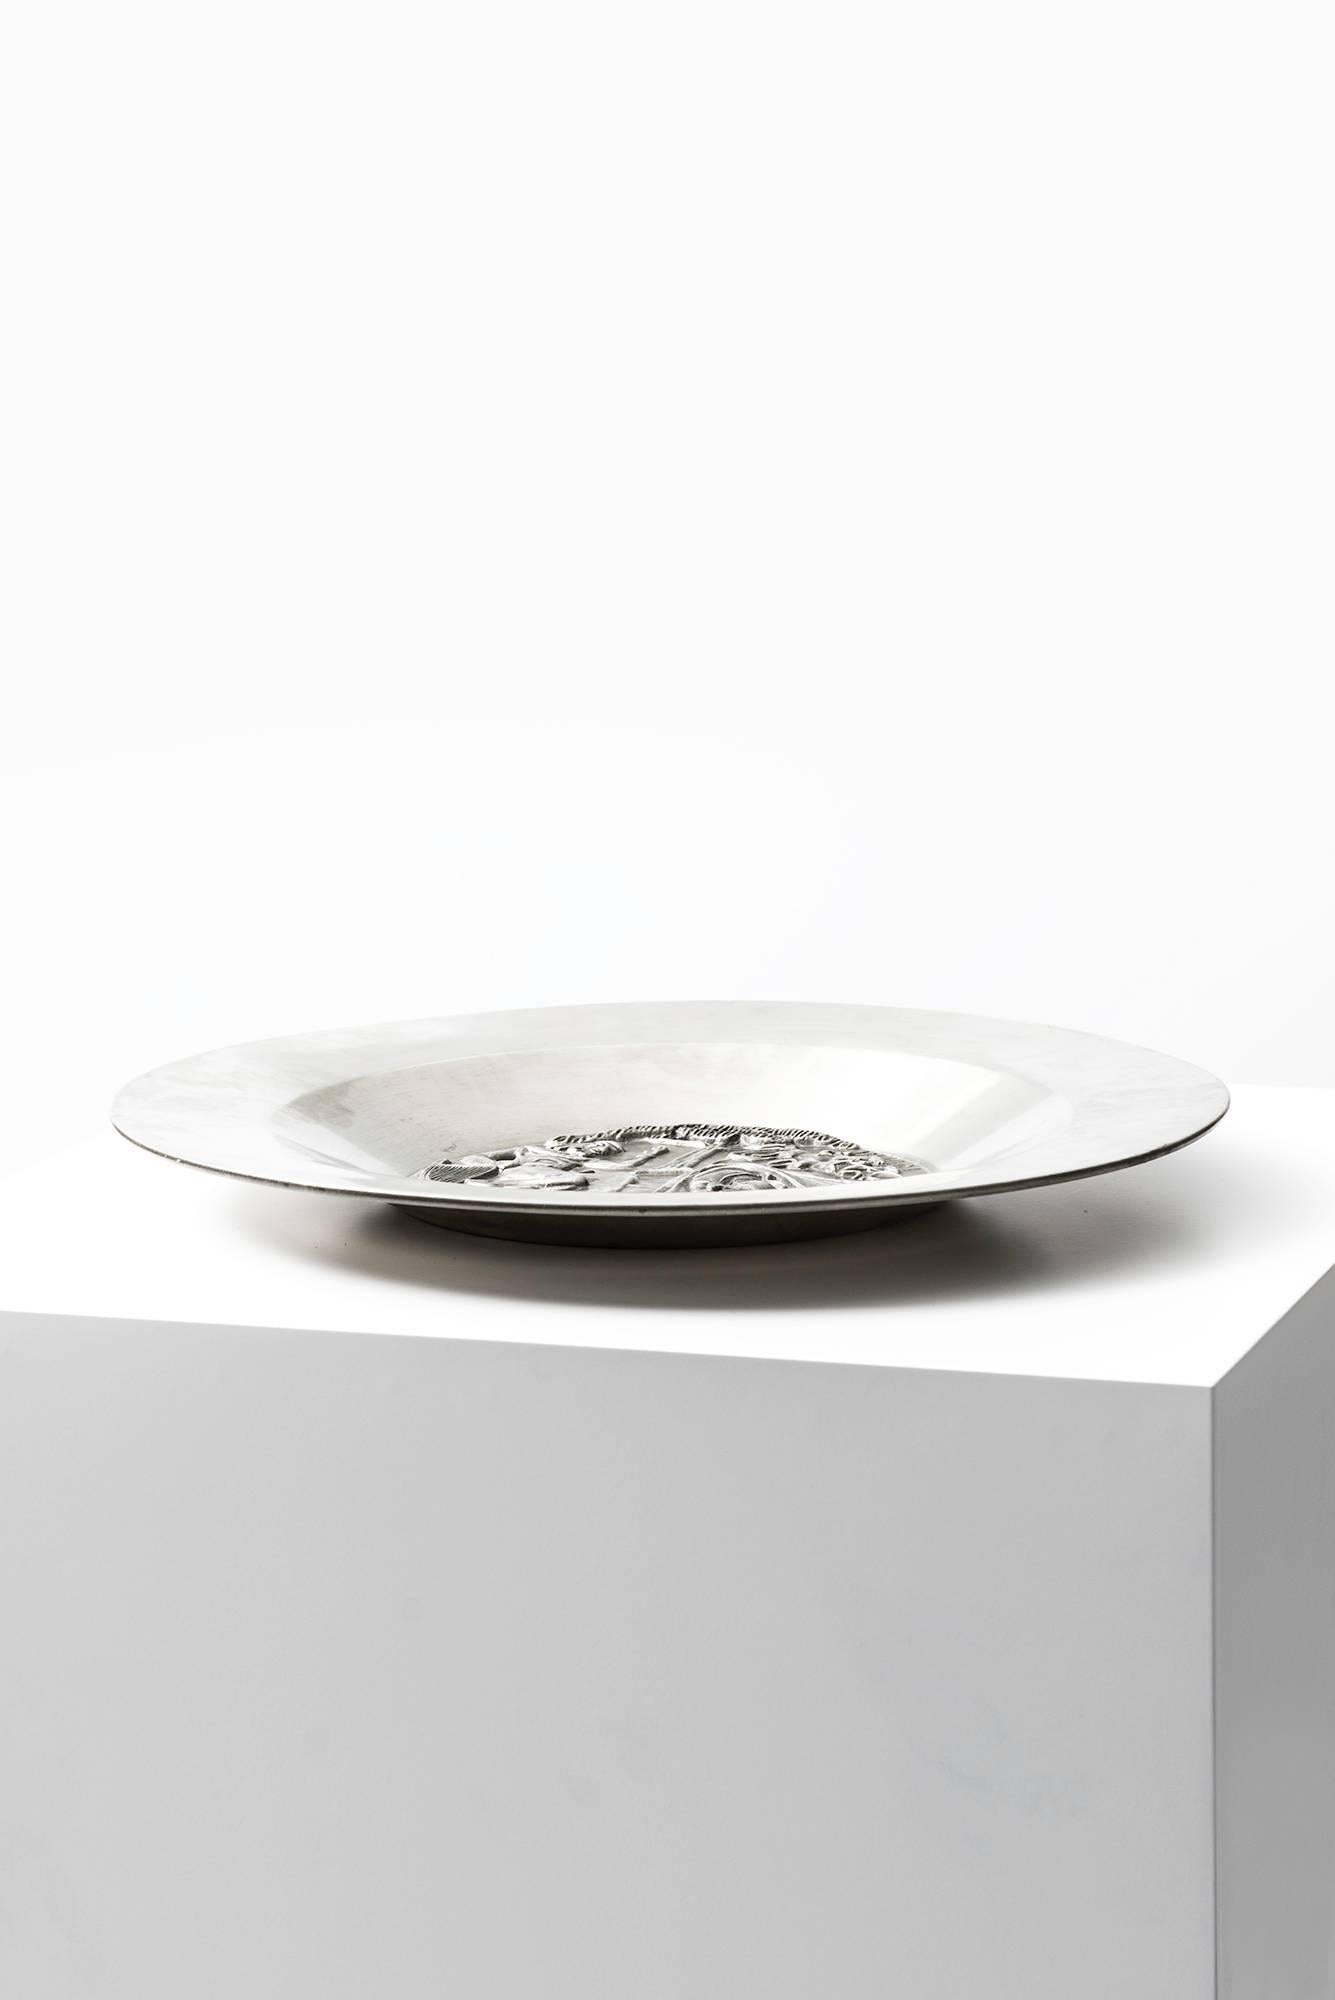 Rare pewter dish designed by Ulla Skogh. Produced by Ystad Tenn in Sweden.